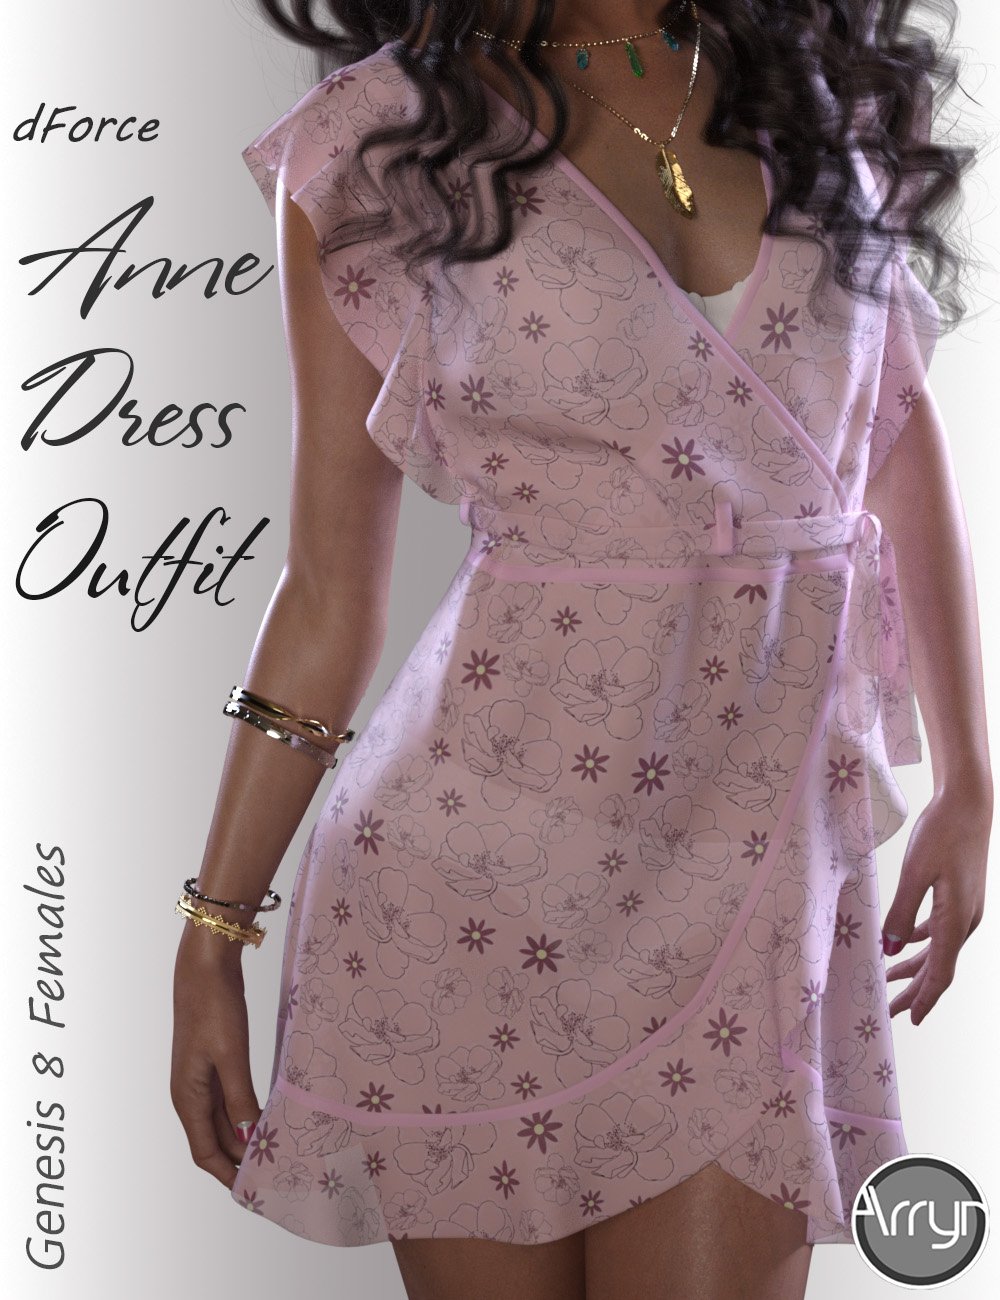 dForce Anne Candy Dress Outfit for Genesis 8 Female(s) by: OnnelArryn, 3D Models by Daz 3D